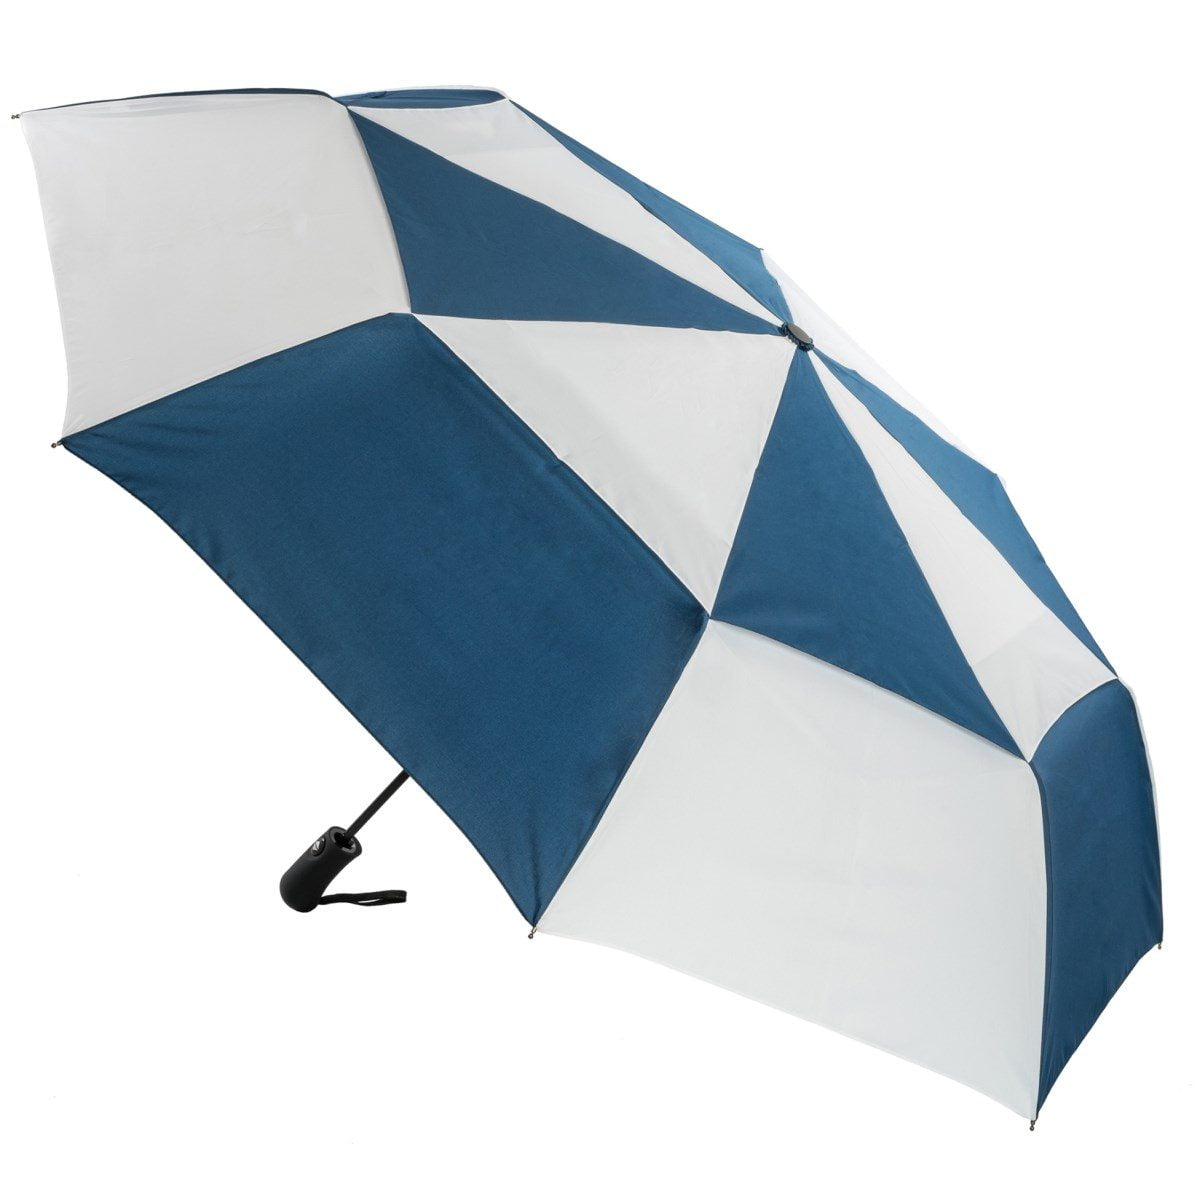 Navy and white folding golf umbrella.